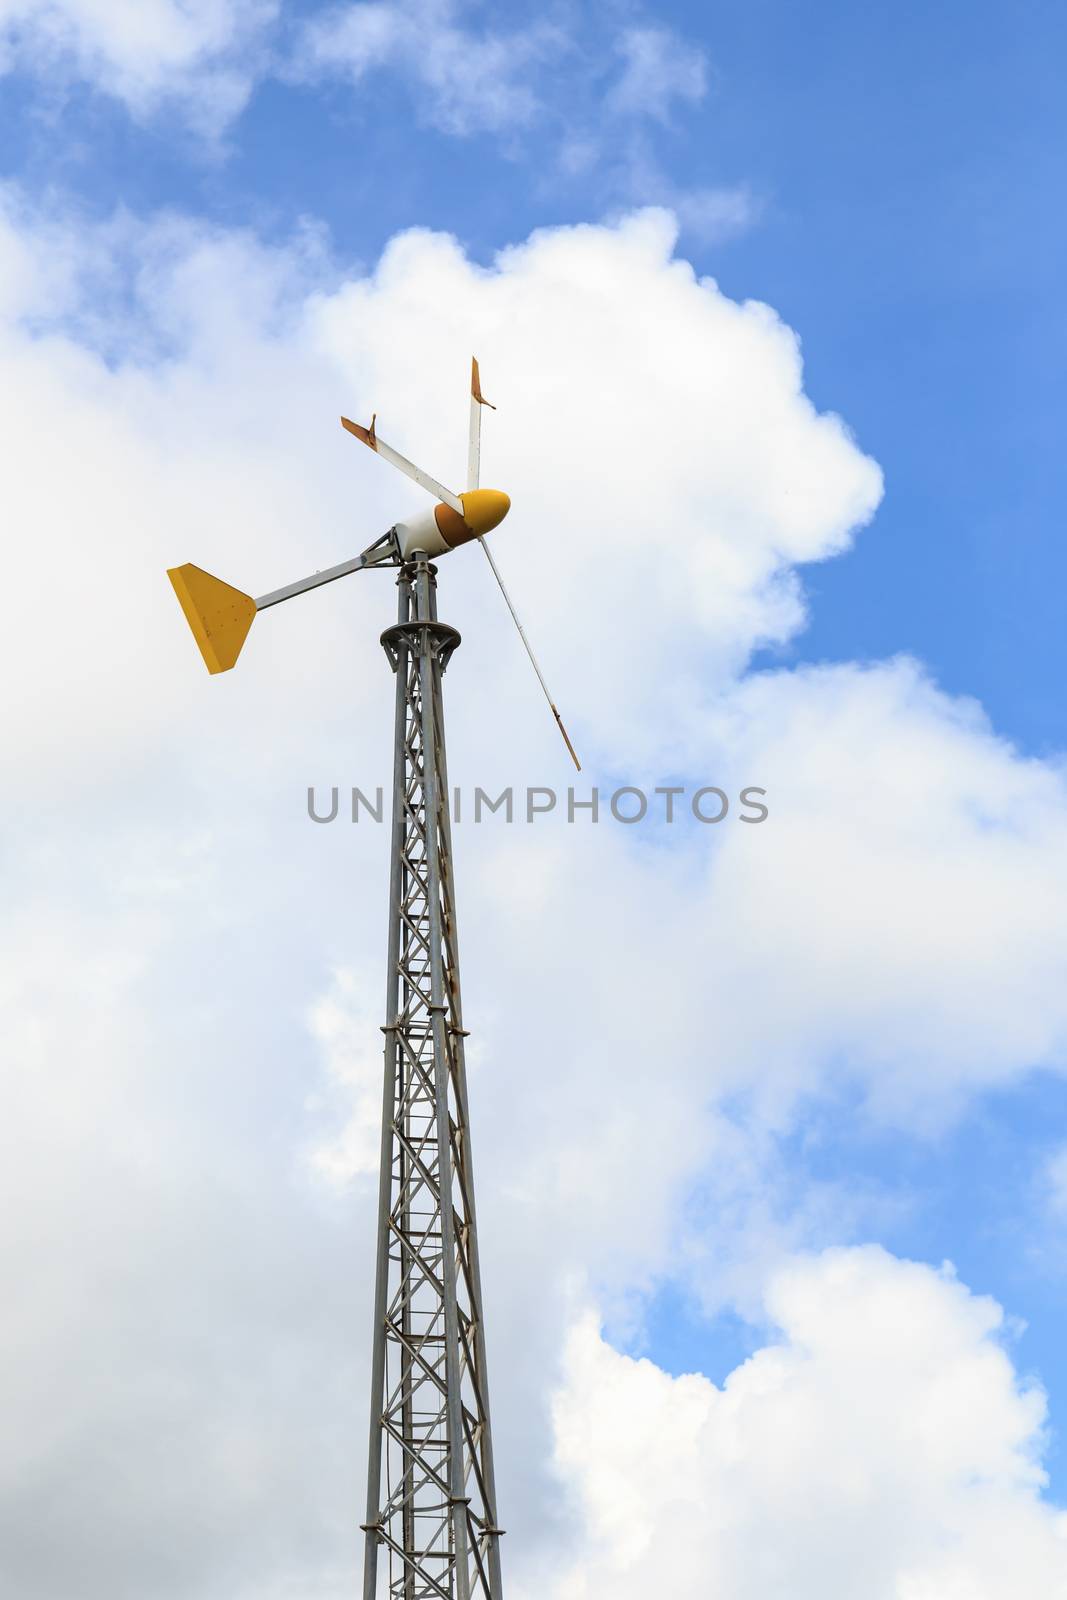 Wind turbines in Phuket, Thailand by nanDphanuwat